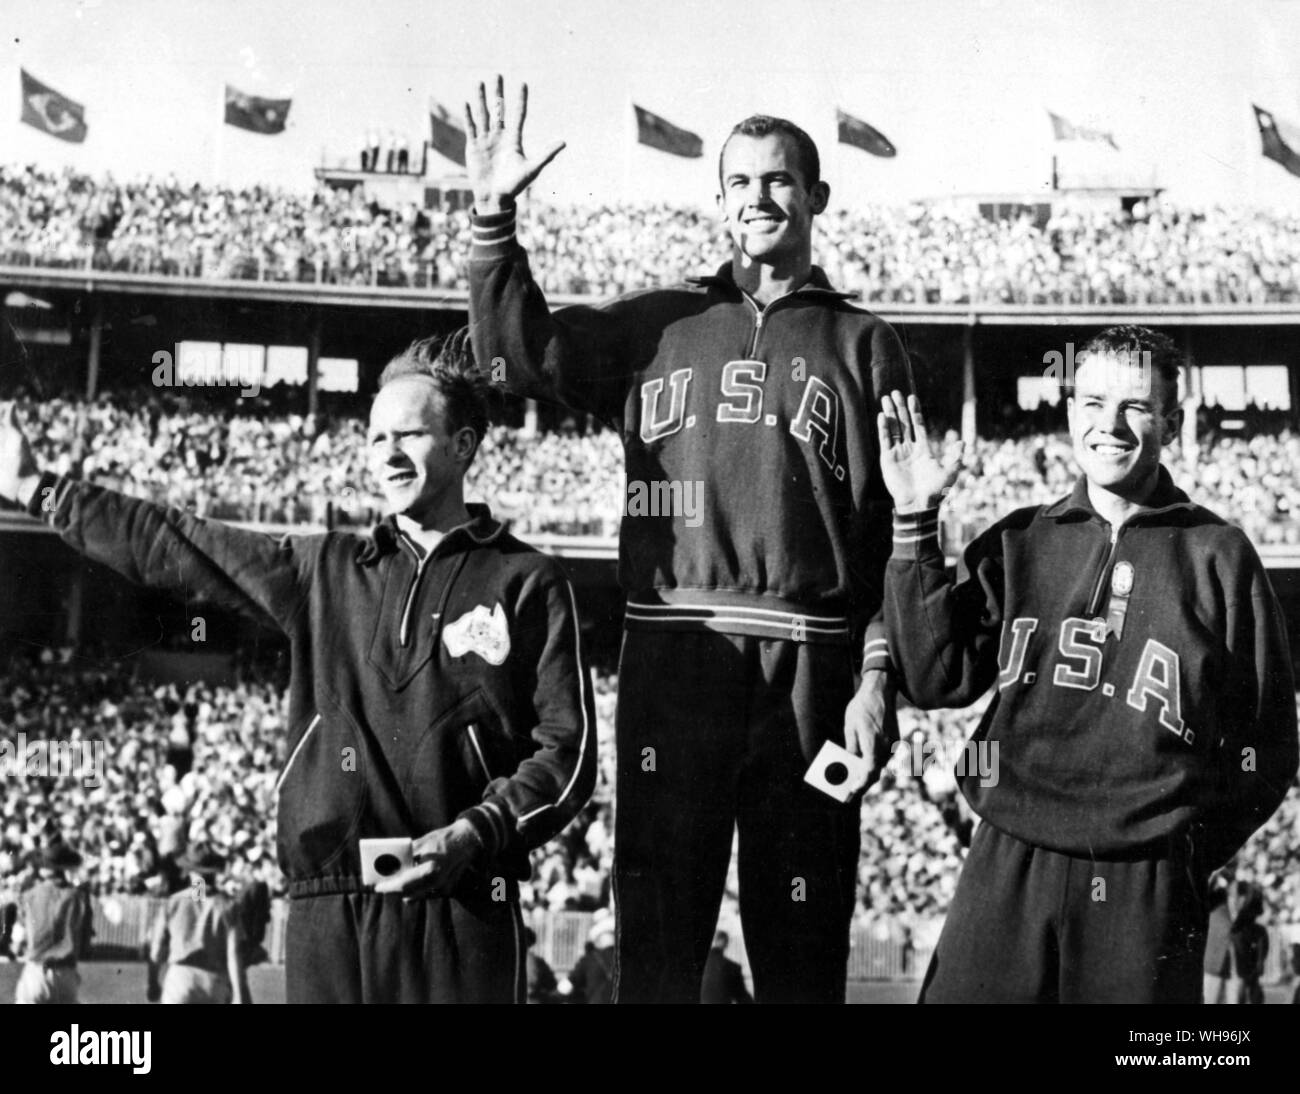 Aus., Melbourne, Olympics, 1956: Men's 100 metres winners' podium. l-r: 3rd, Hec Hogan . 1st, Bob Marrow . 2nd Walter Baker. Stock Photo